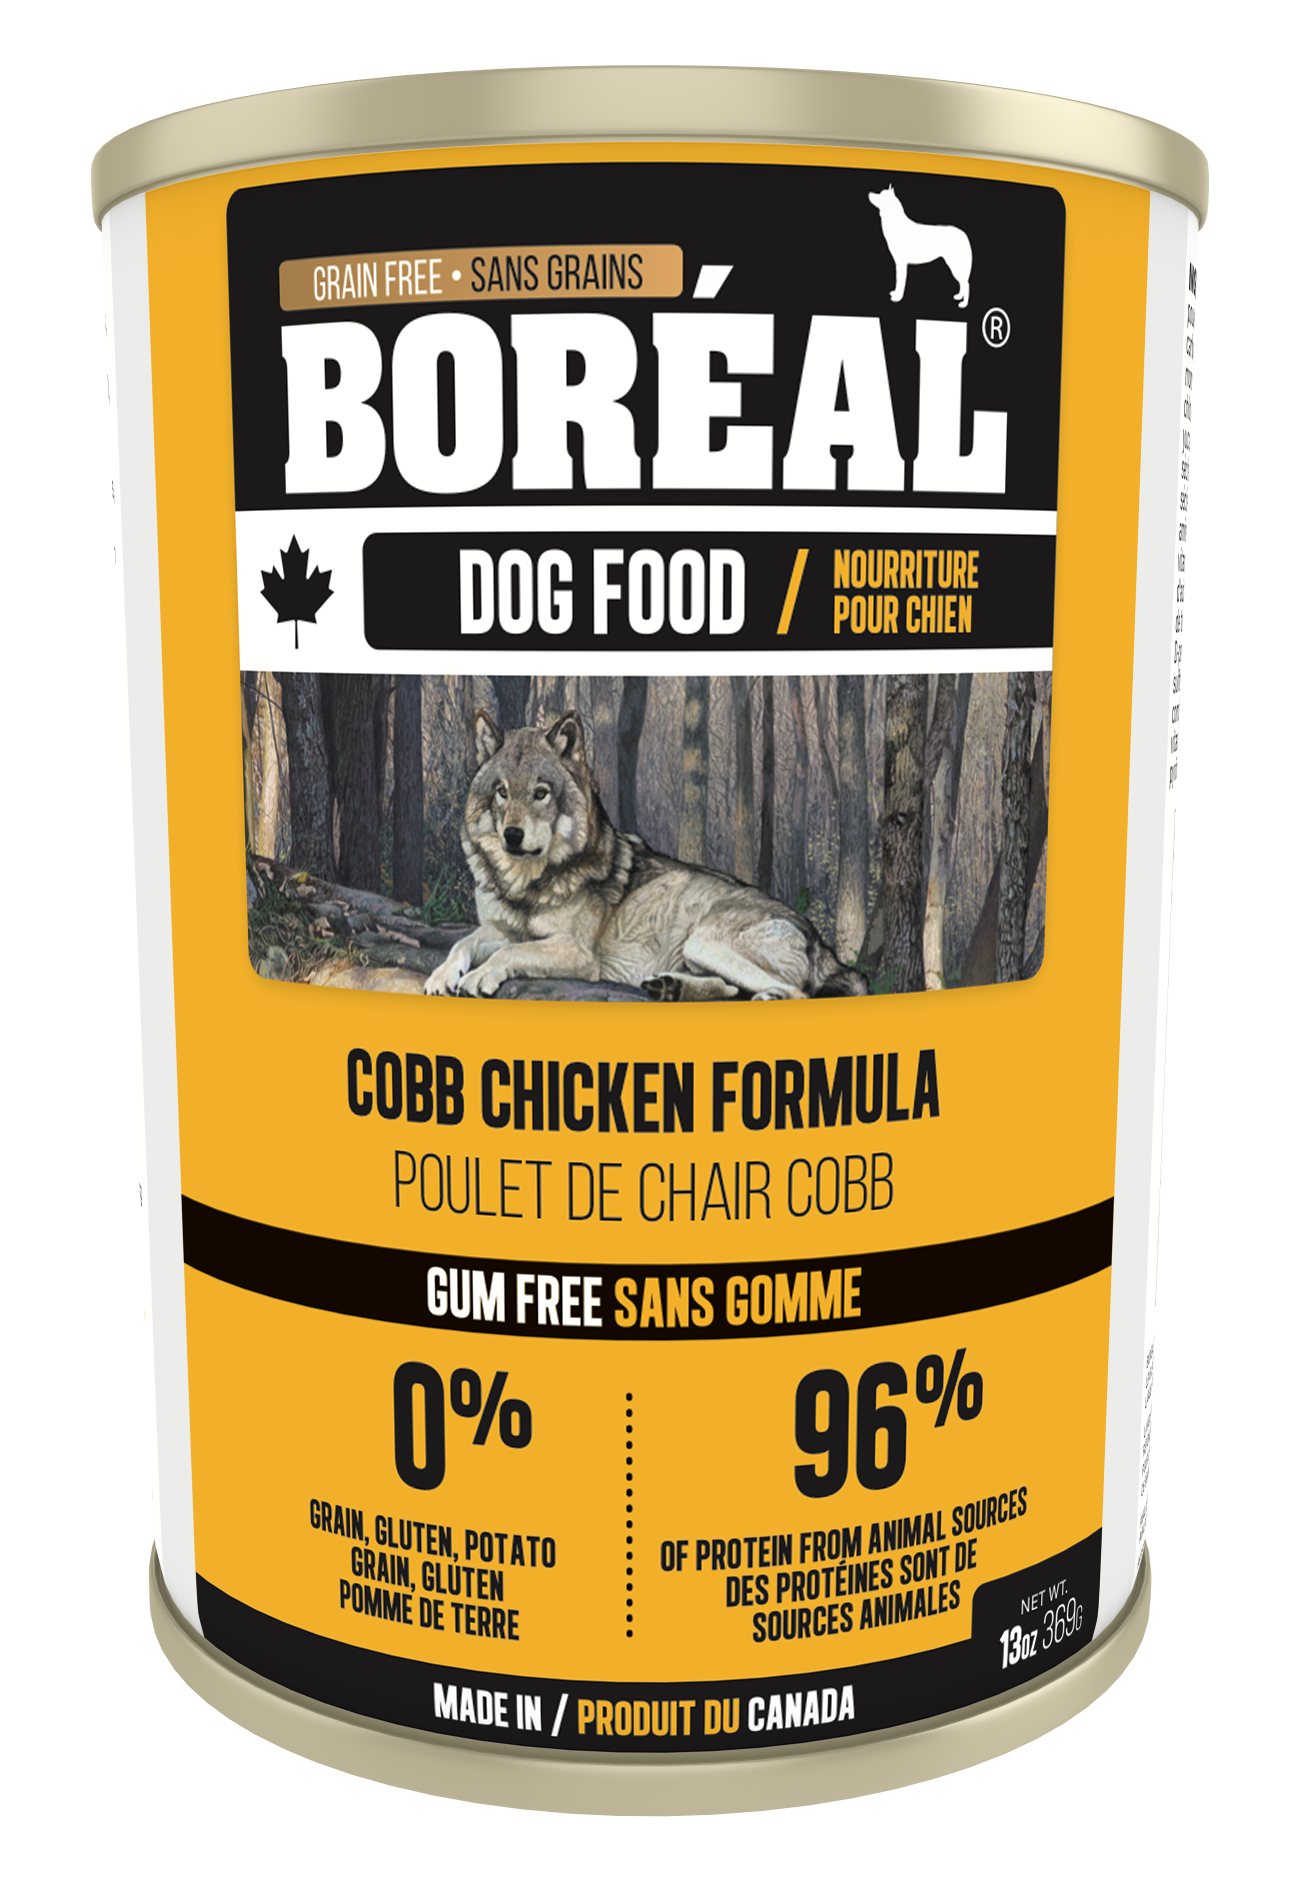 BORÉAL CANADIAN COBB CHICKEN FORMULA for Dogs 12 x 13.2 oz cans